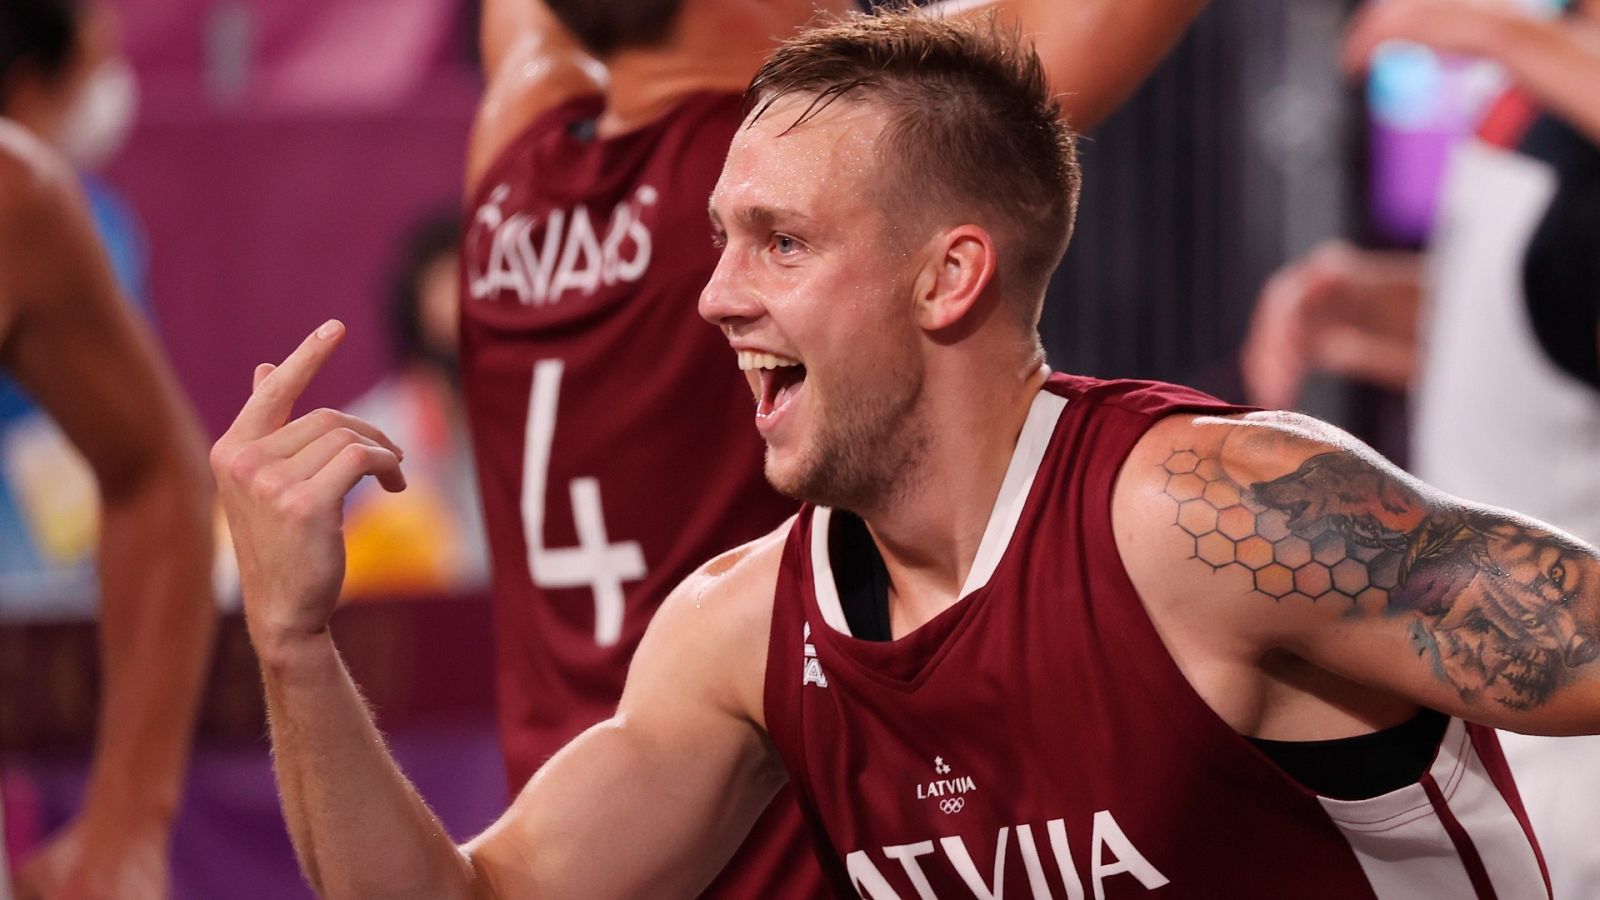 La selección masculina de Letonia, oro olímpico en baloncesto 3x3